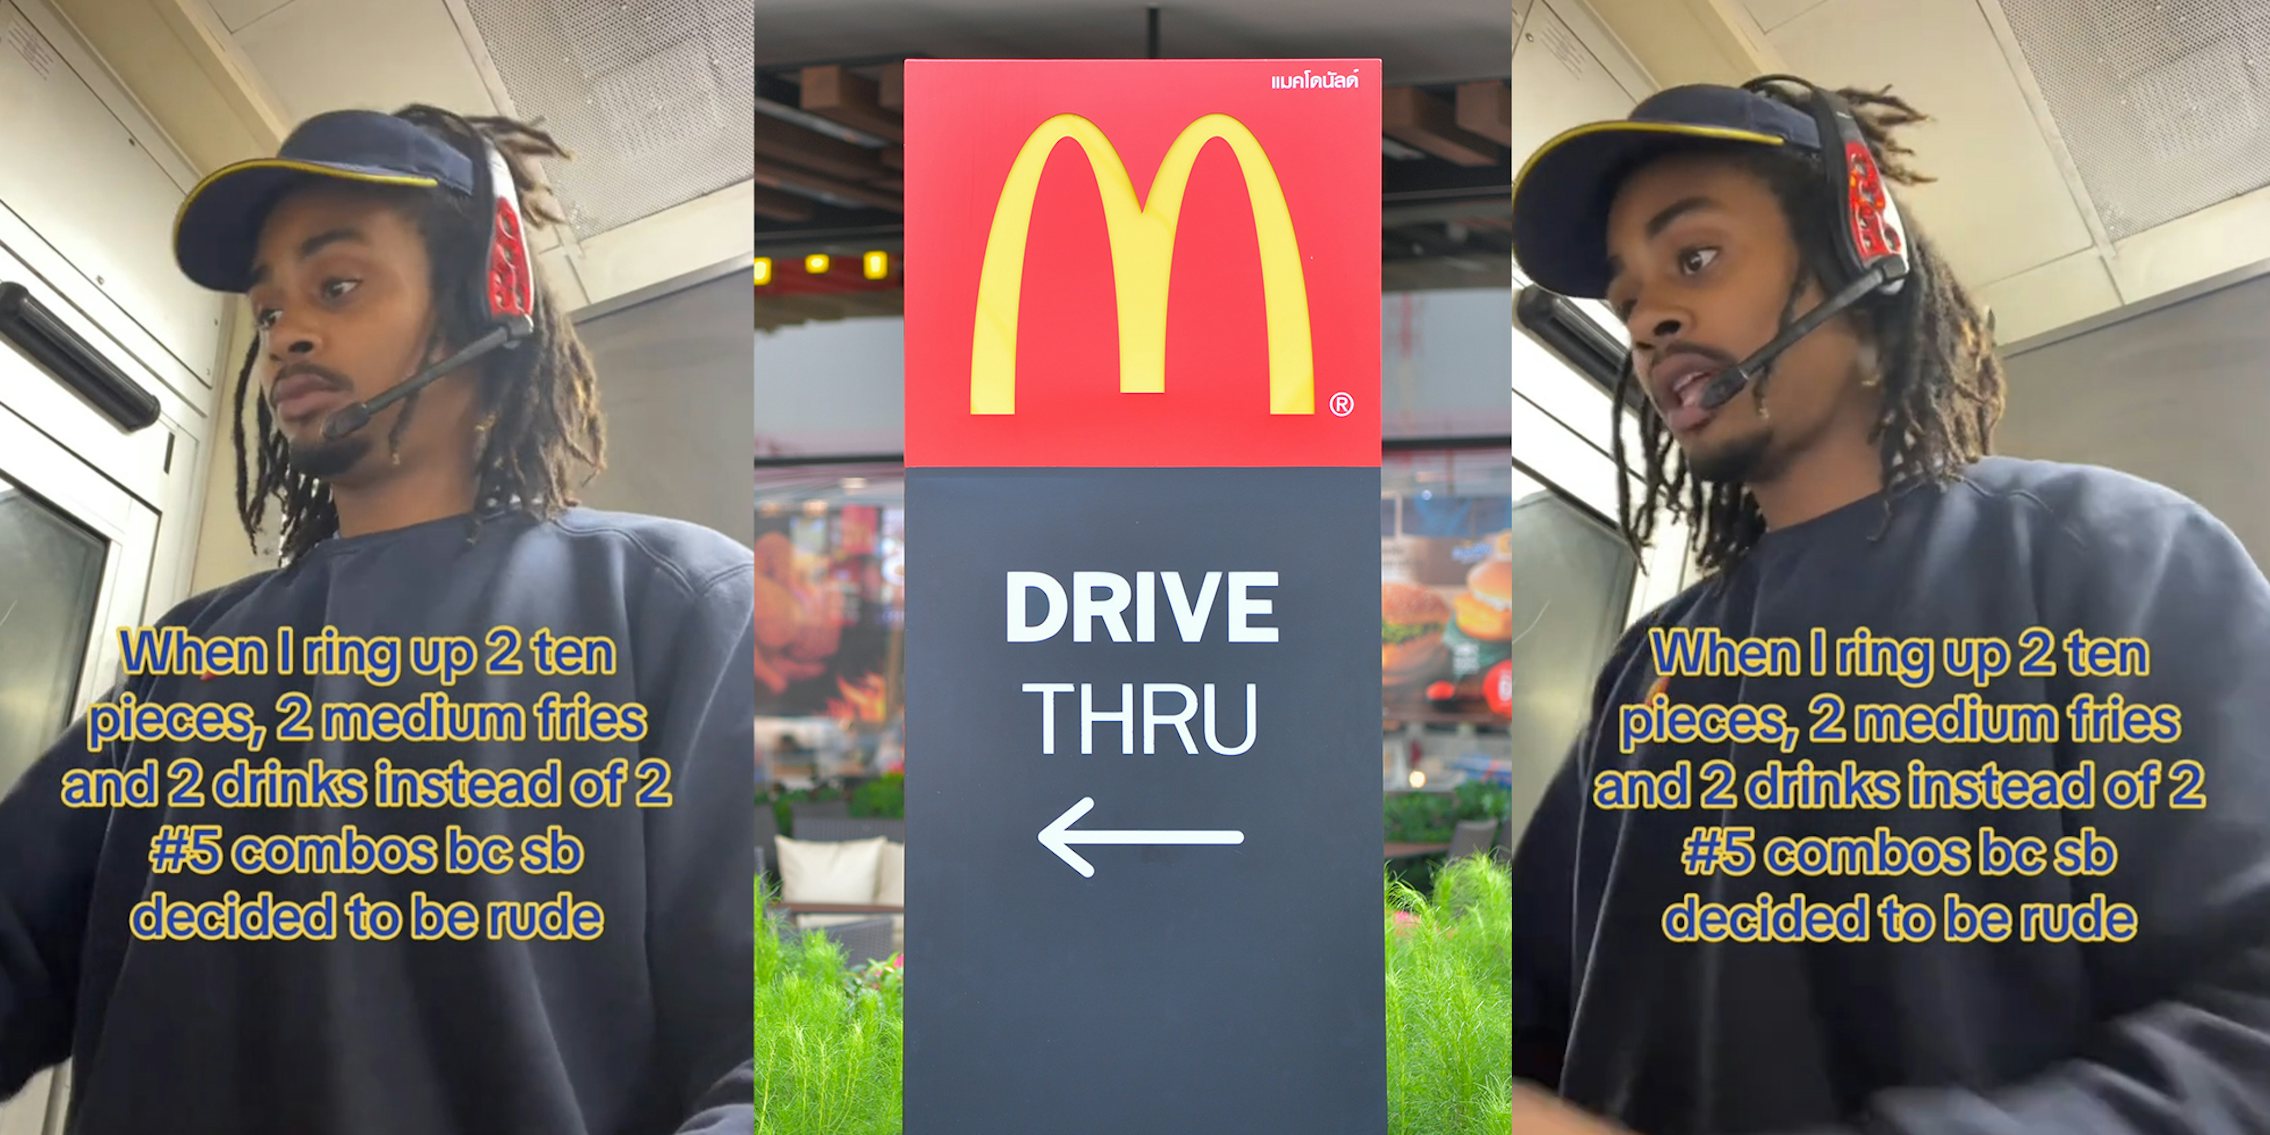 Don't be rude at the McDonald's drive-thru